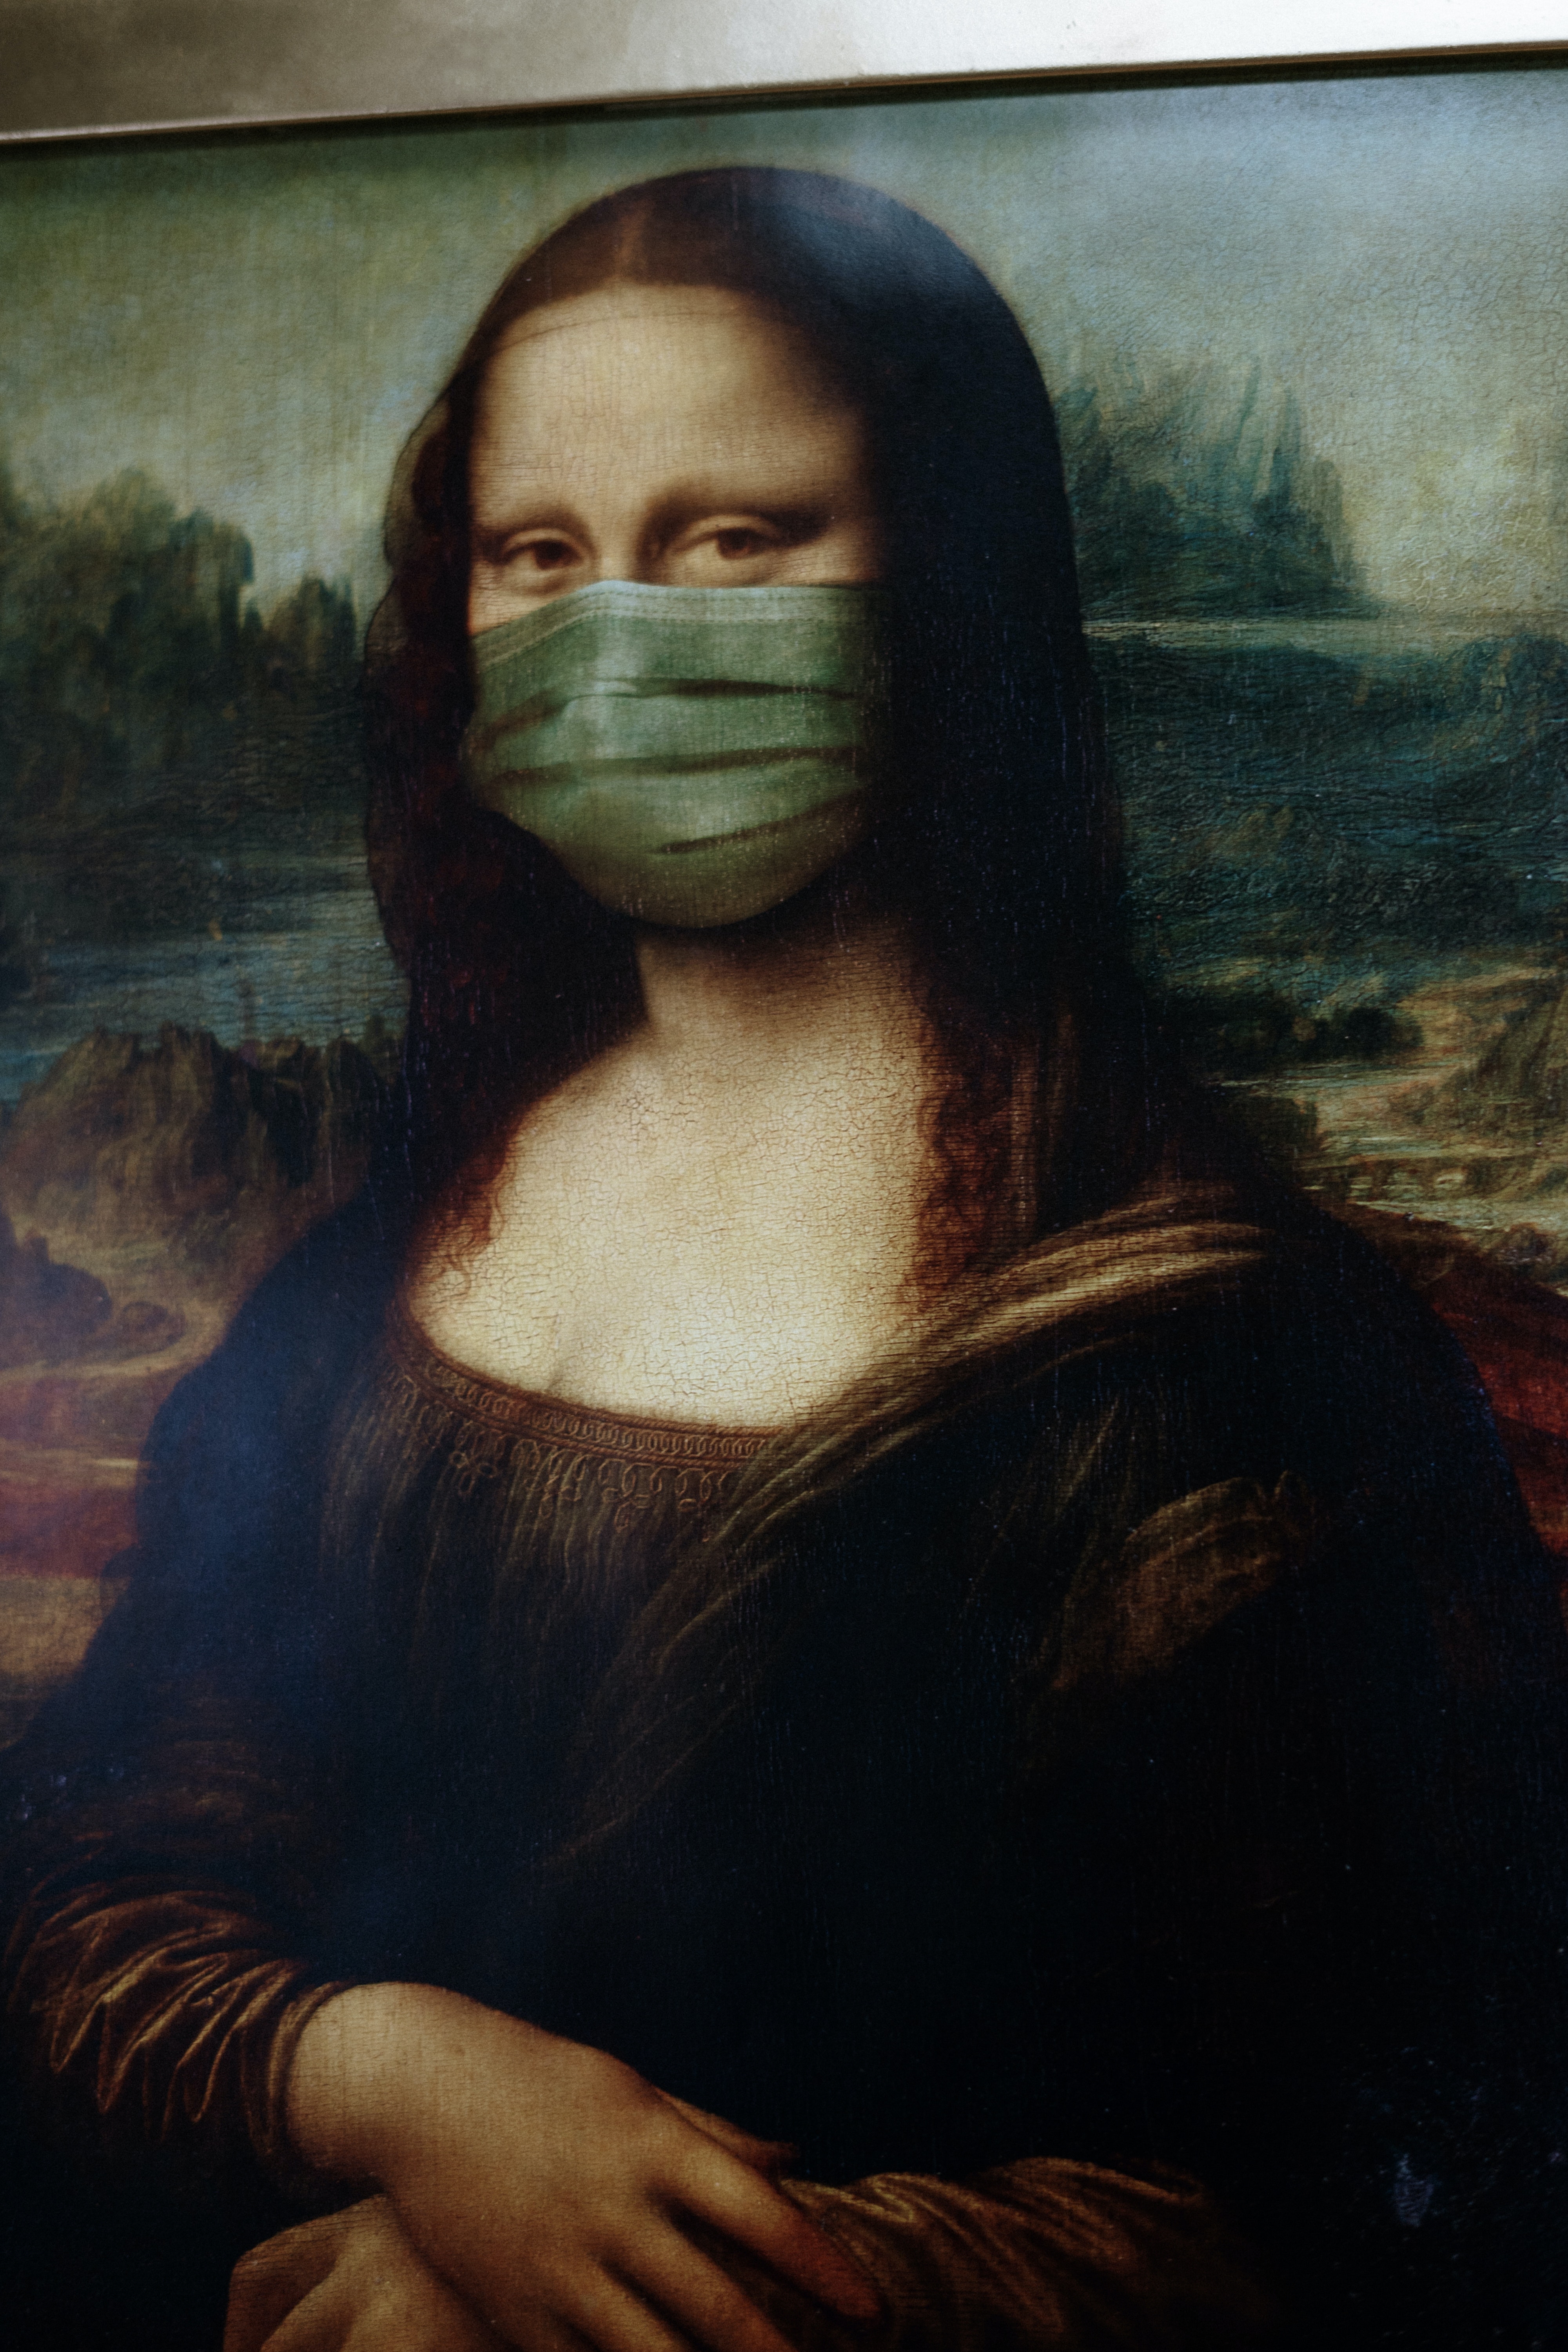 Mona Lisa painting wearing a medical mask.